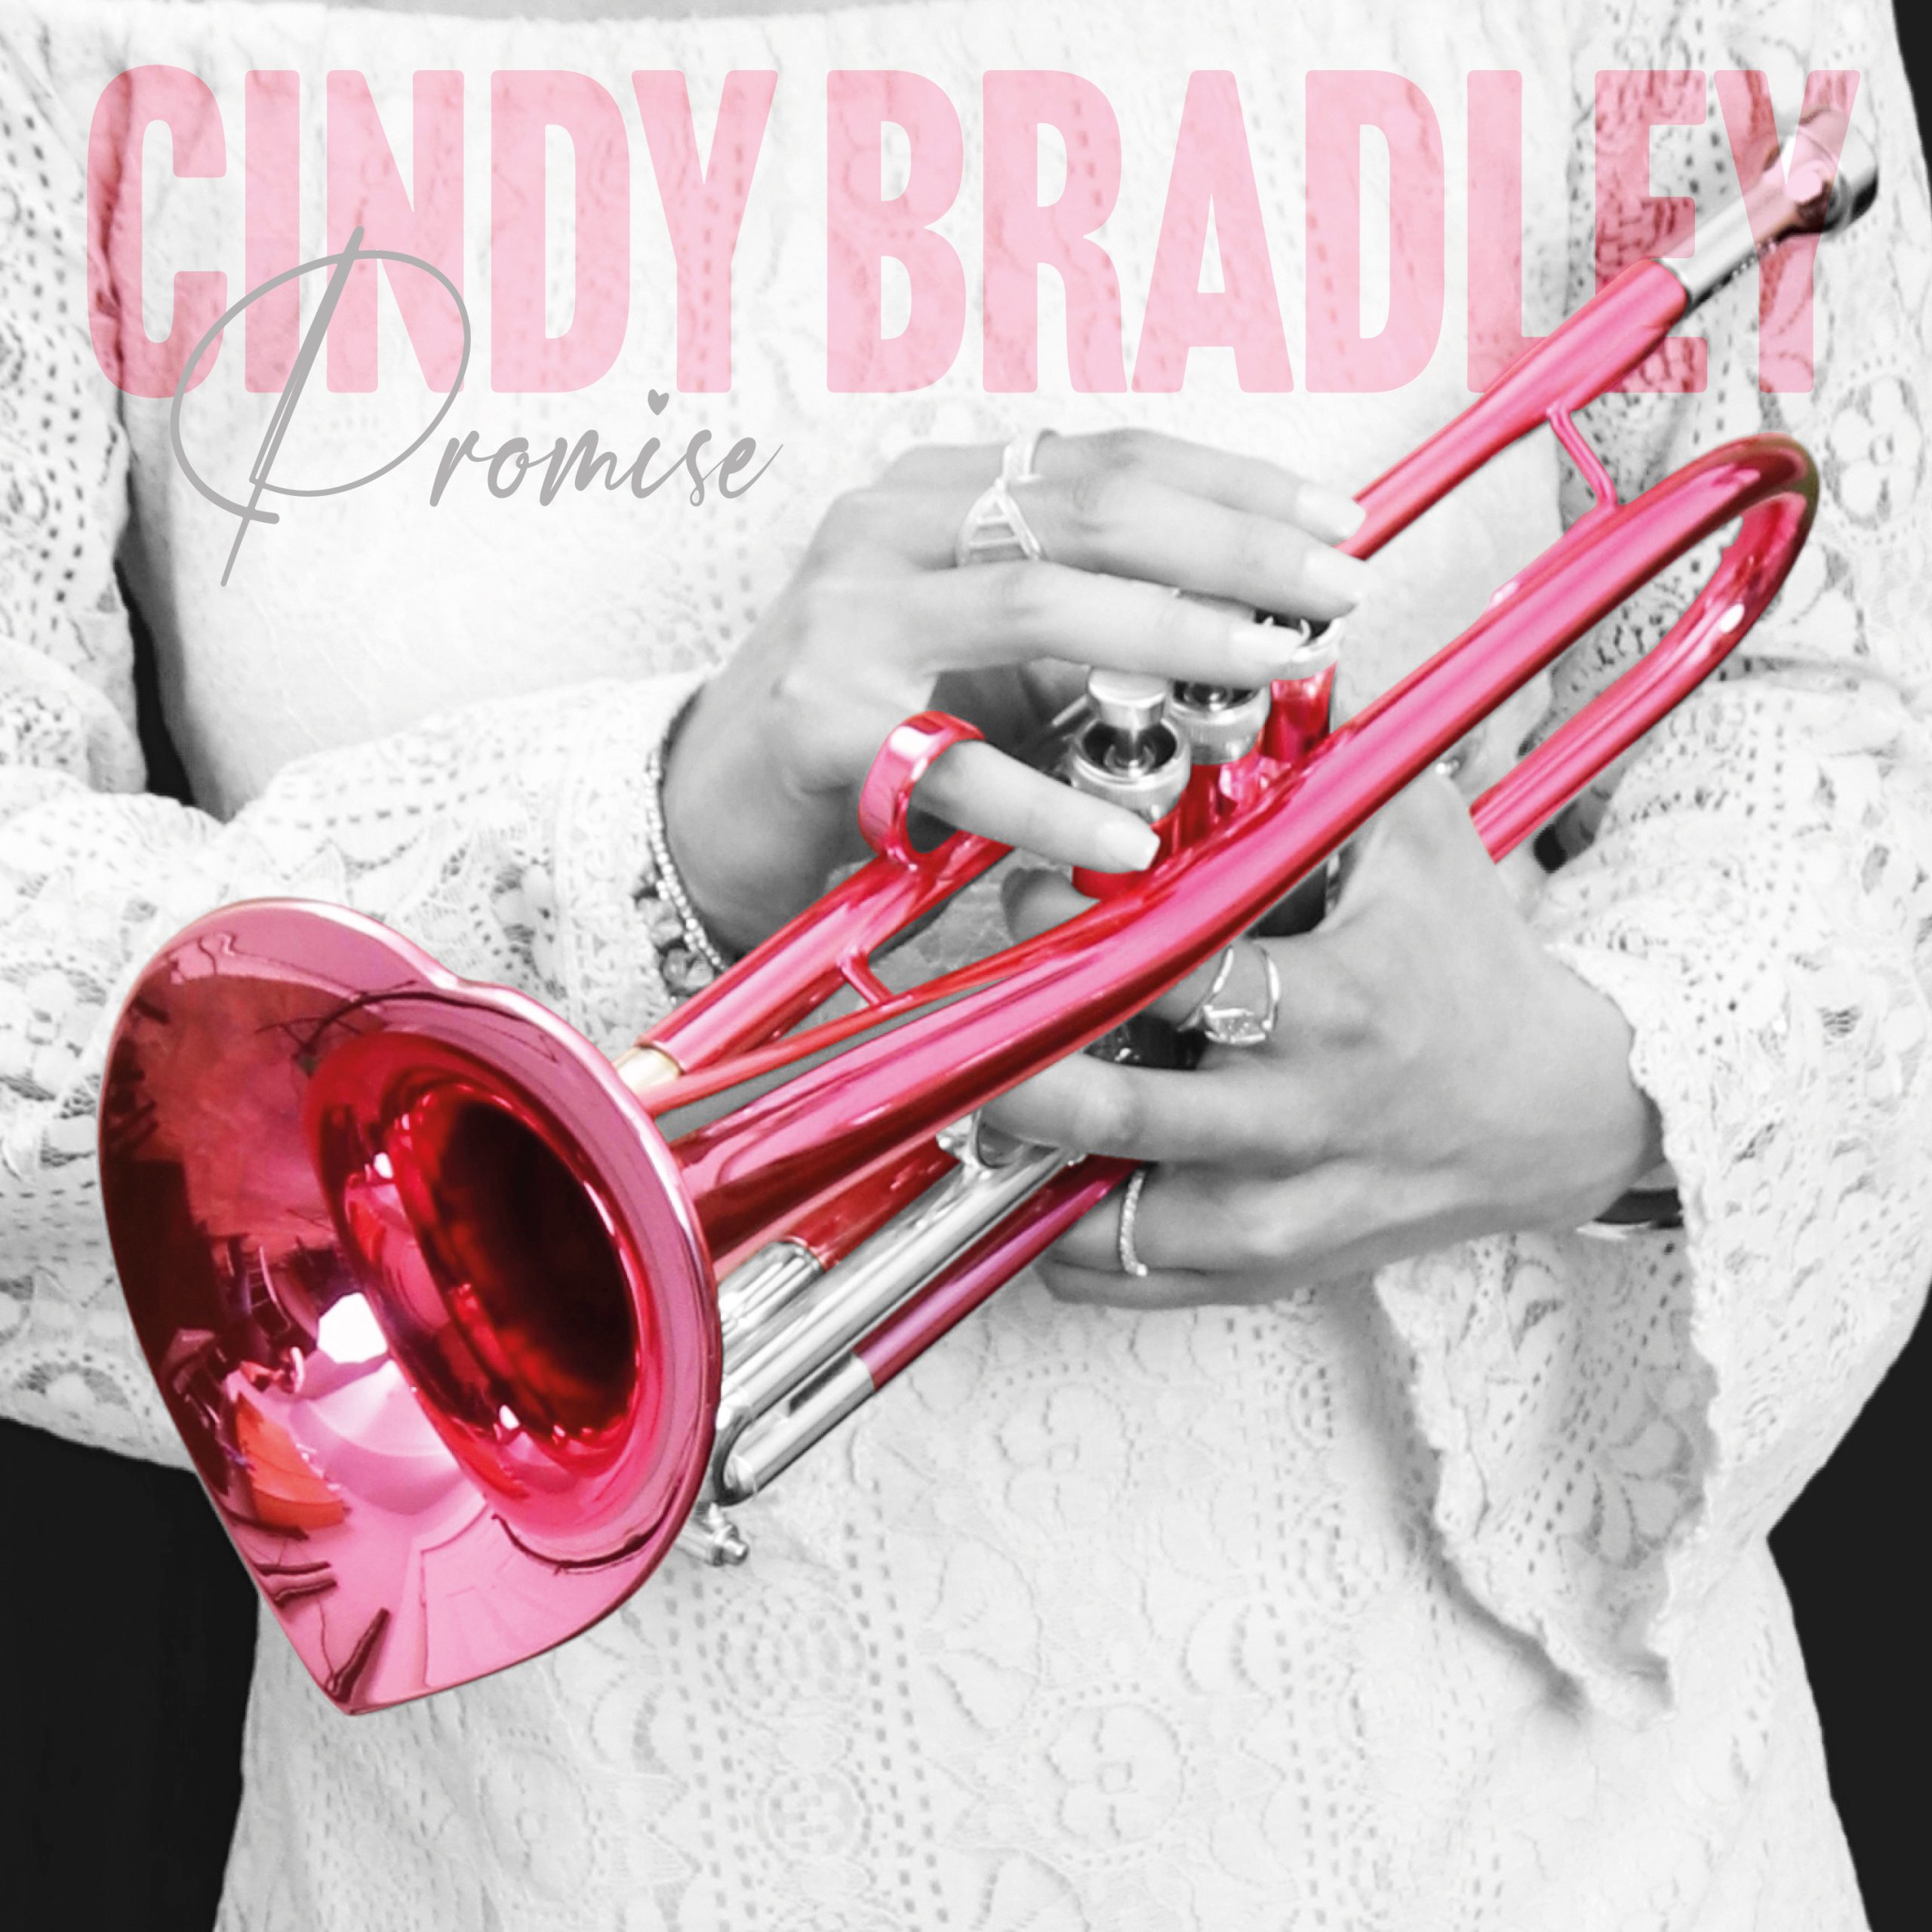 Cindy Bradley ‘Promise’ – LISTEN